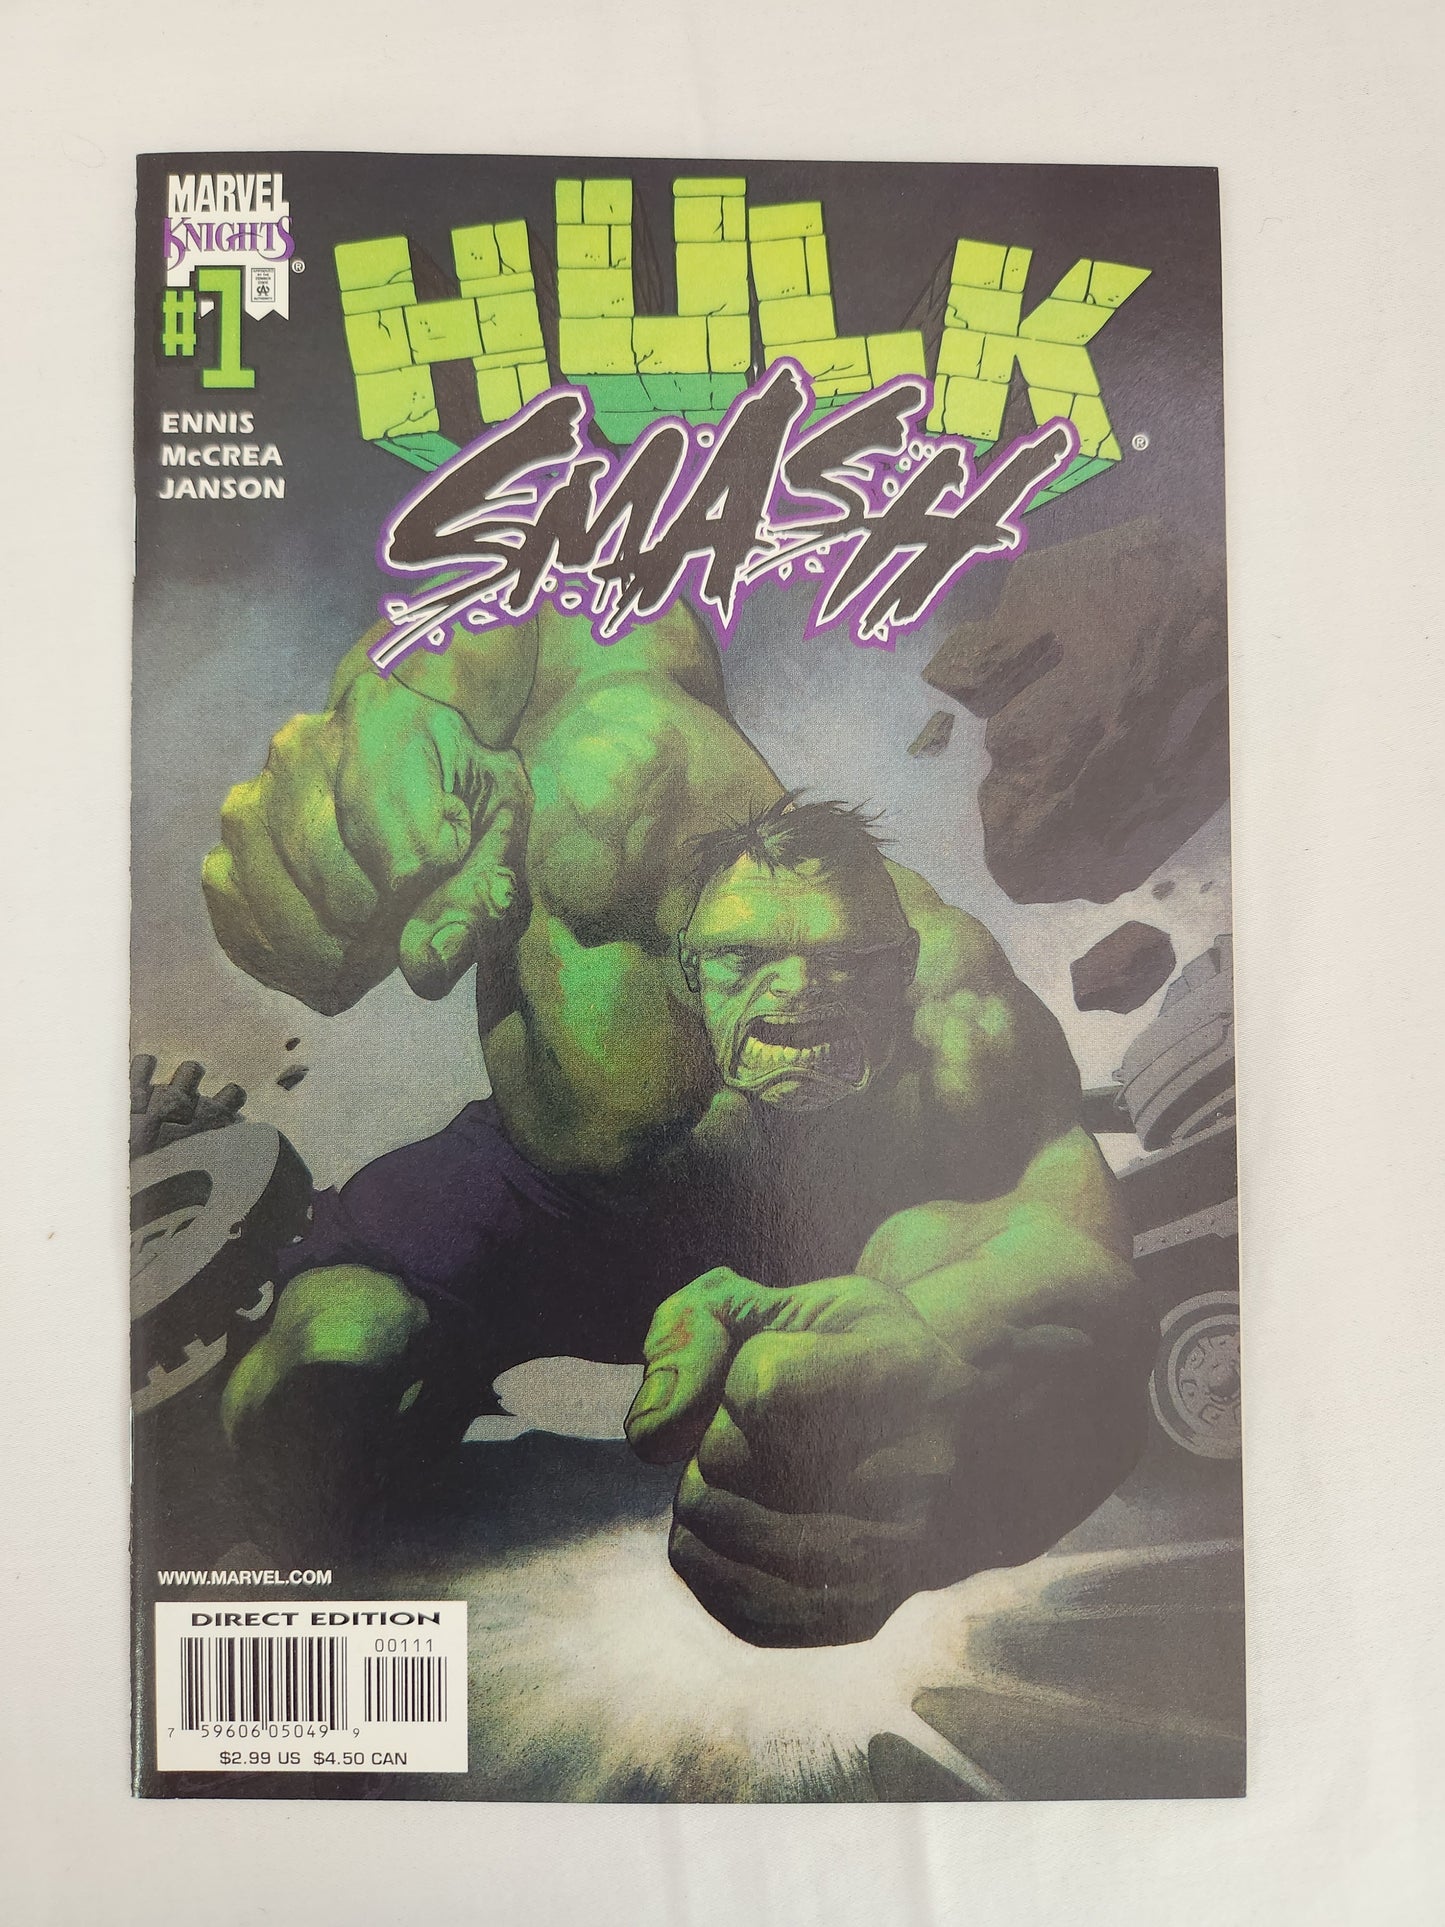 Hulk Smash! #1 & #2 Comic Books - NM Condition